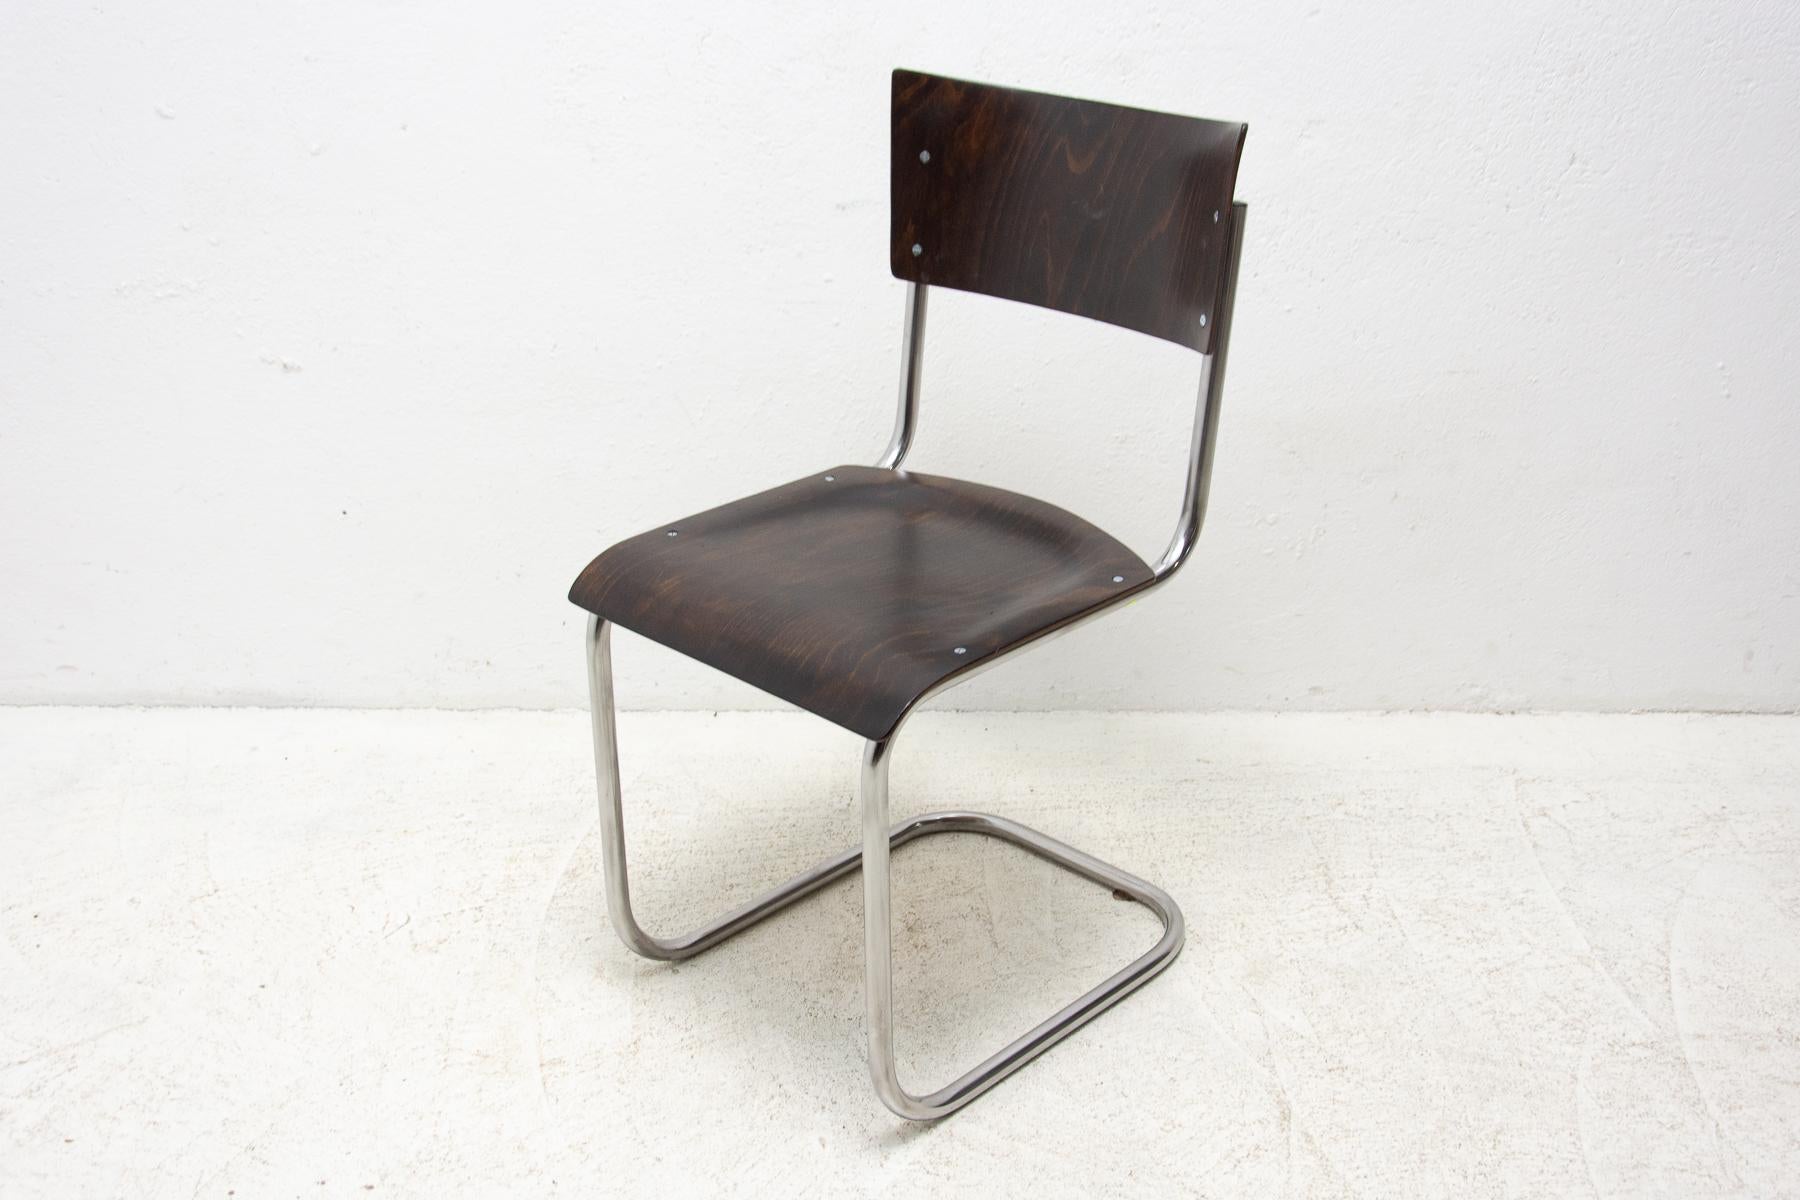 Czech Bauhaus Chair S43 by Mart Stam, 1930s For Sale